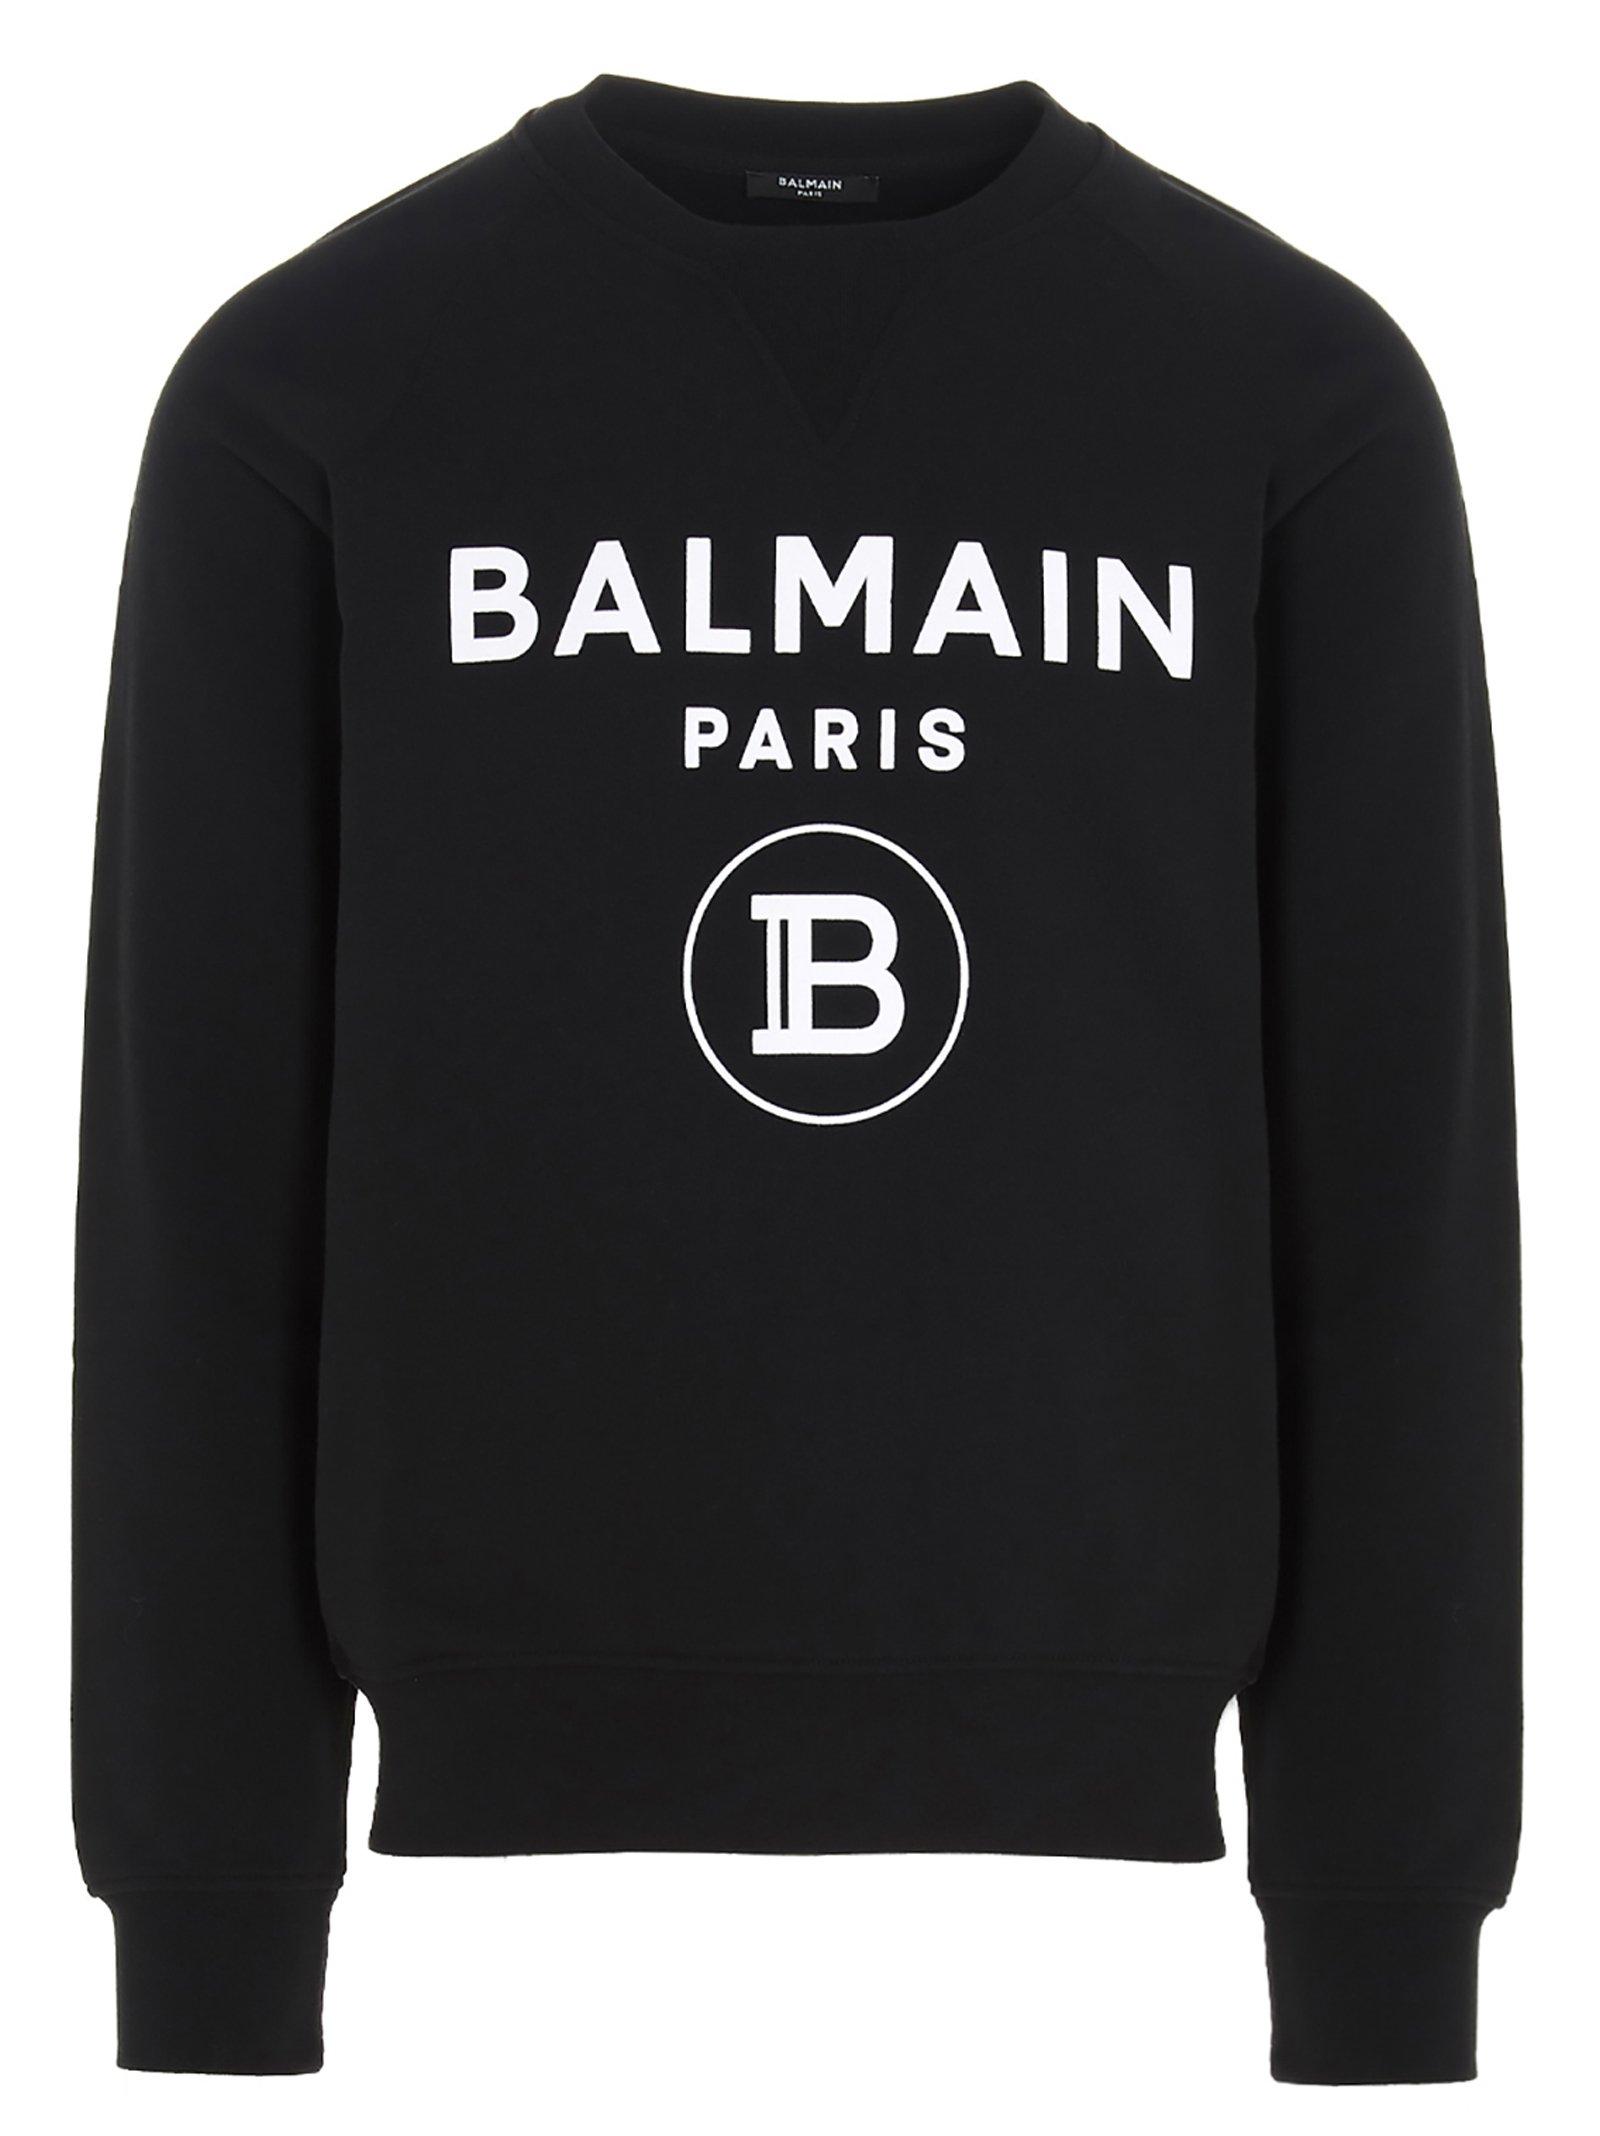 Balmain Cotton Logo Printed Sweatshirt in Black for Men - Lyst